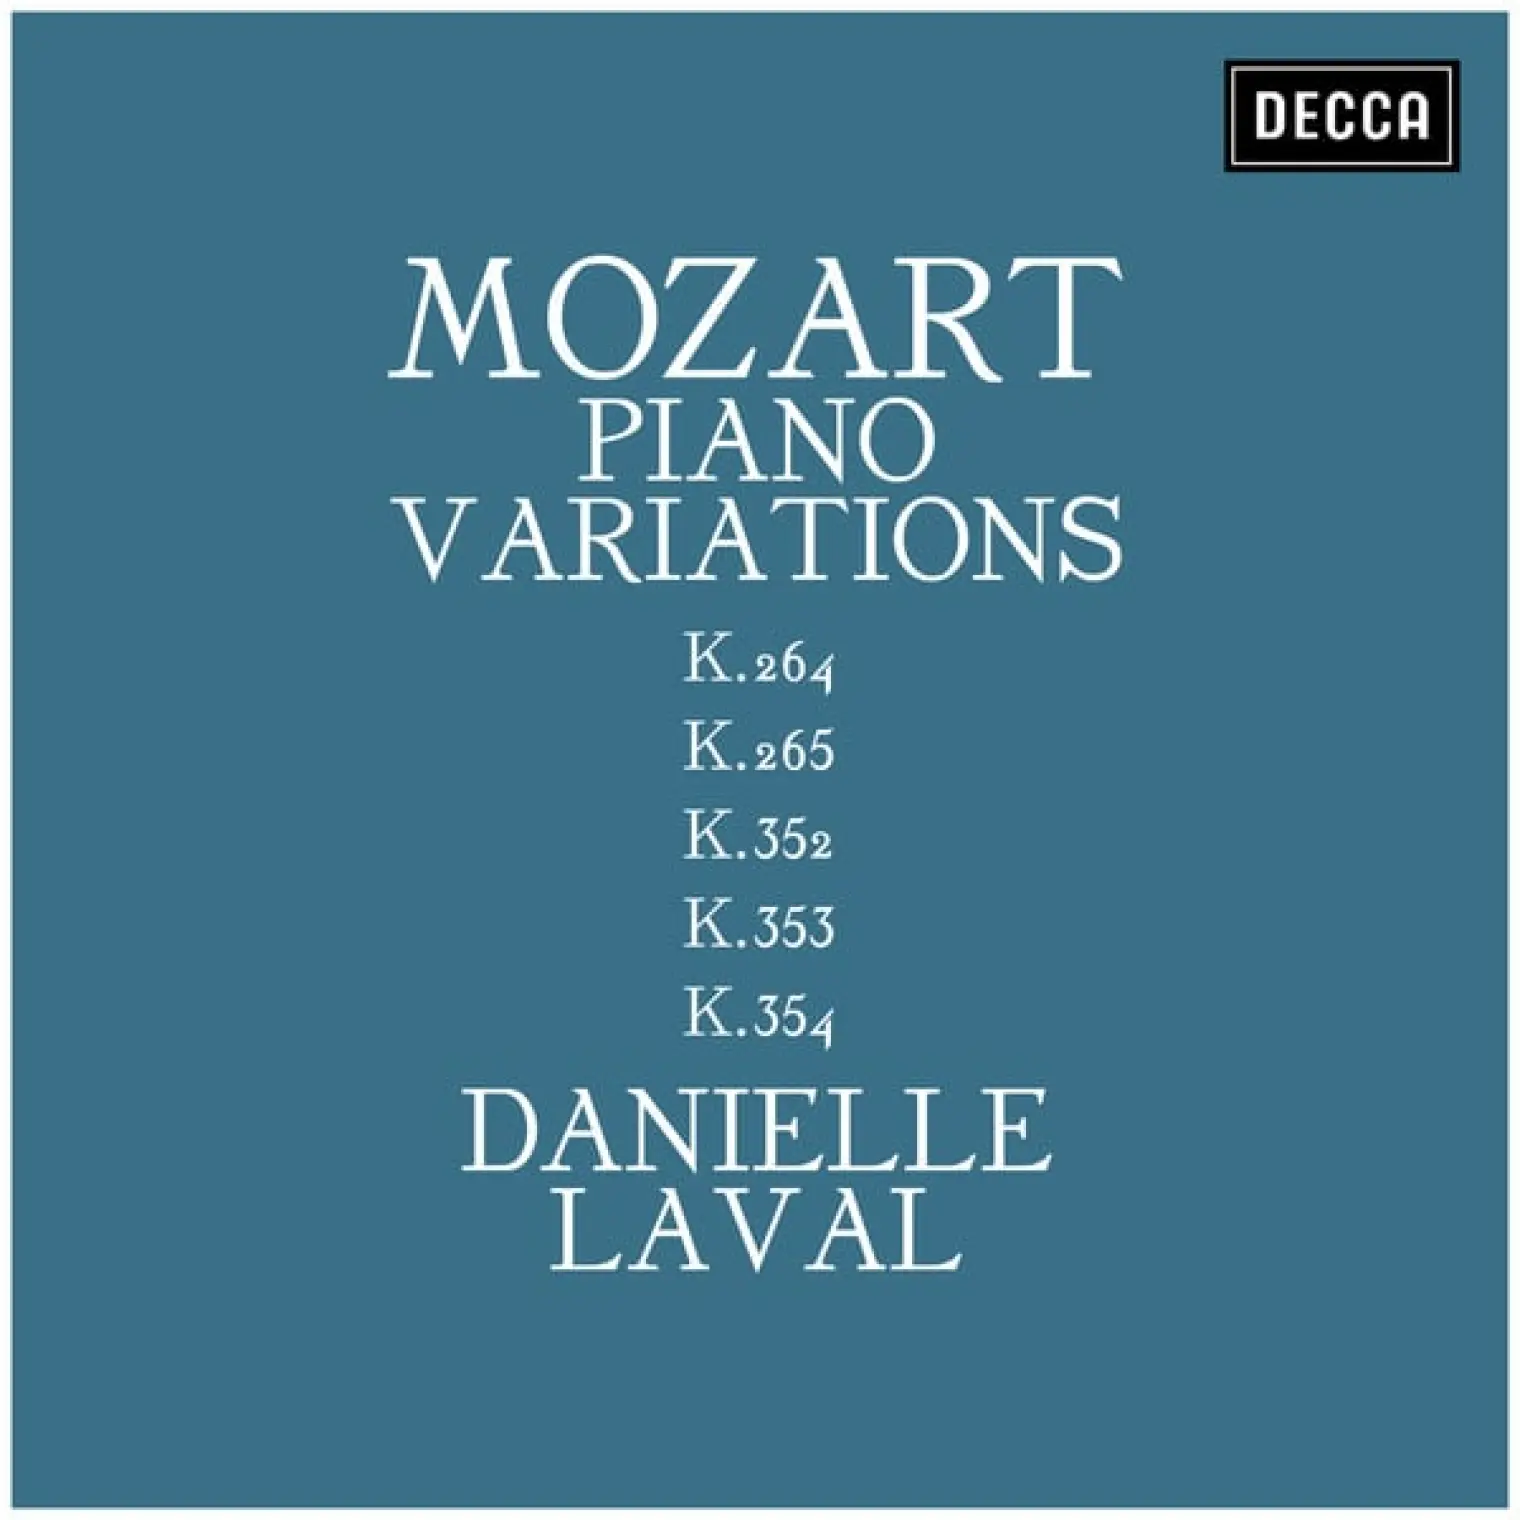 Mozart: Piano Variations K.264, K. 265, K.352, K.353, K.354 -  Danielle Laval 